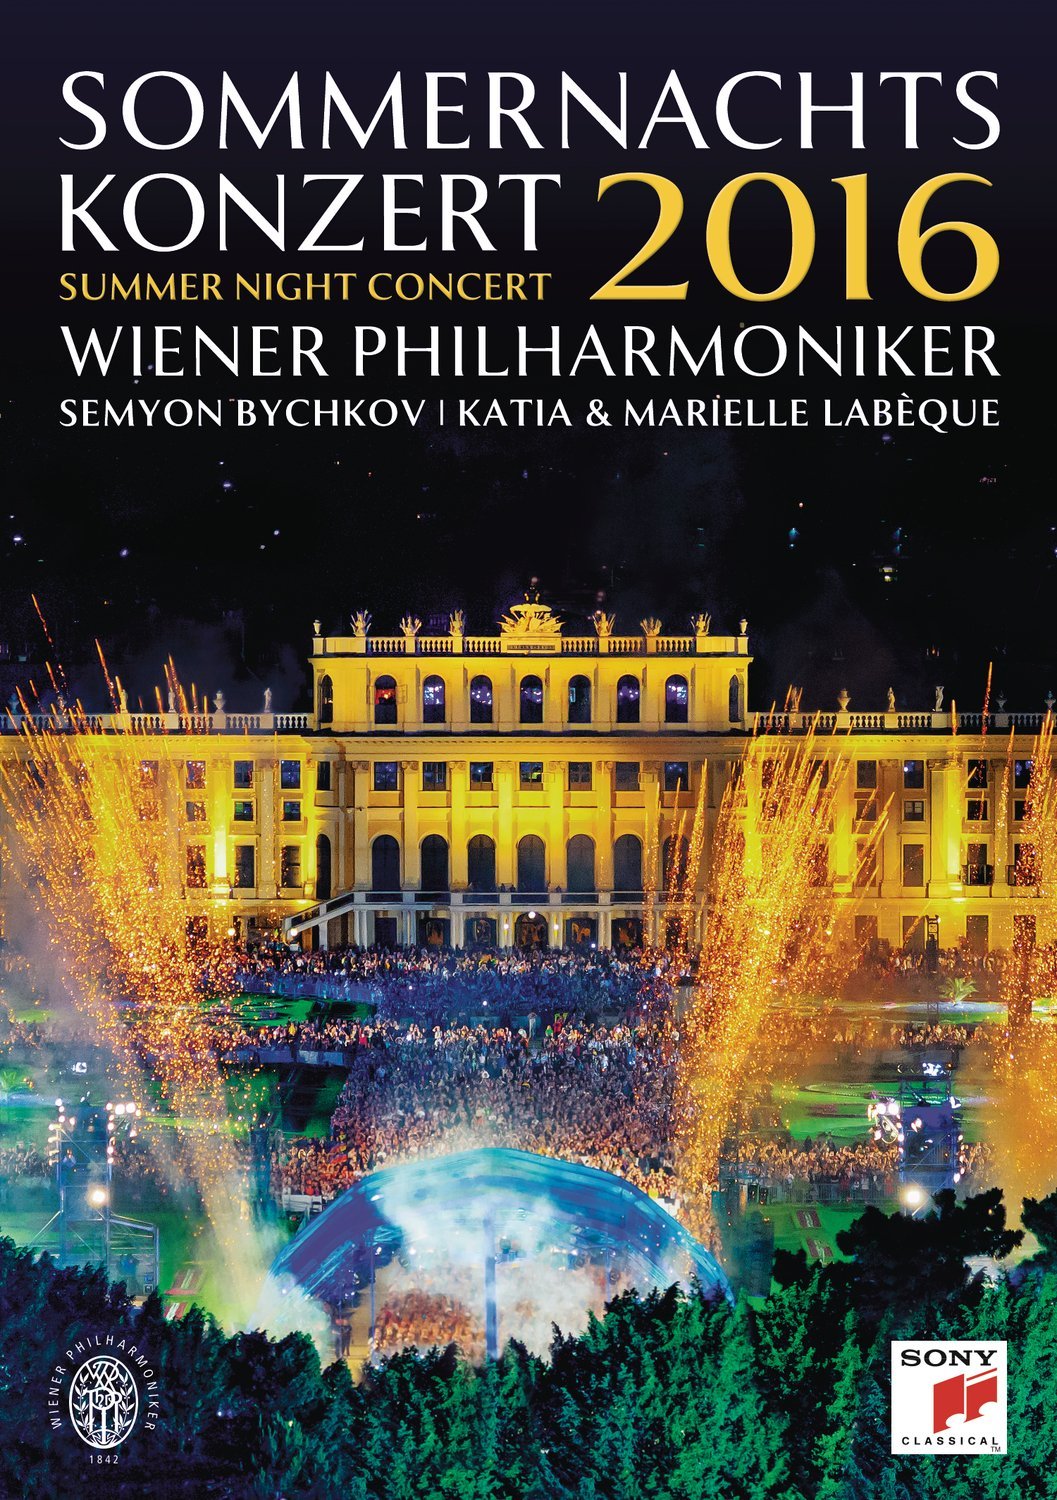 Sommernachtskoncert 2016 - Wiener Philharmoniker | Wiener Philharmoniker